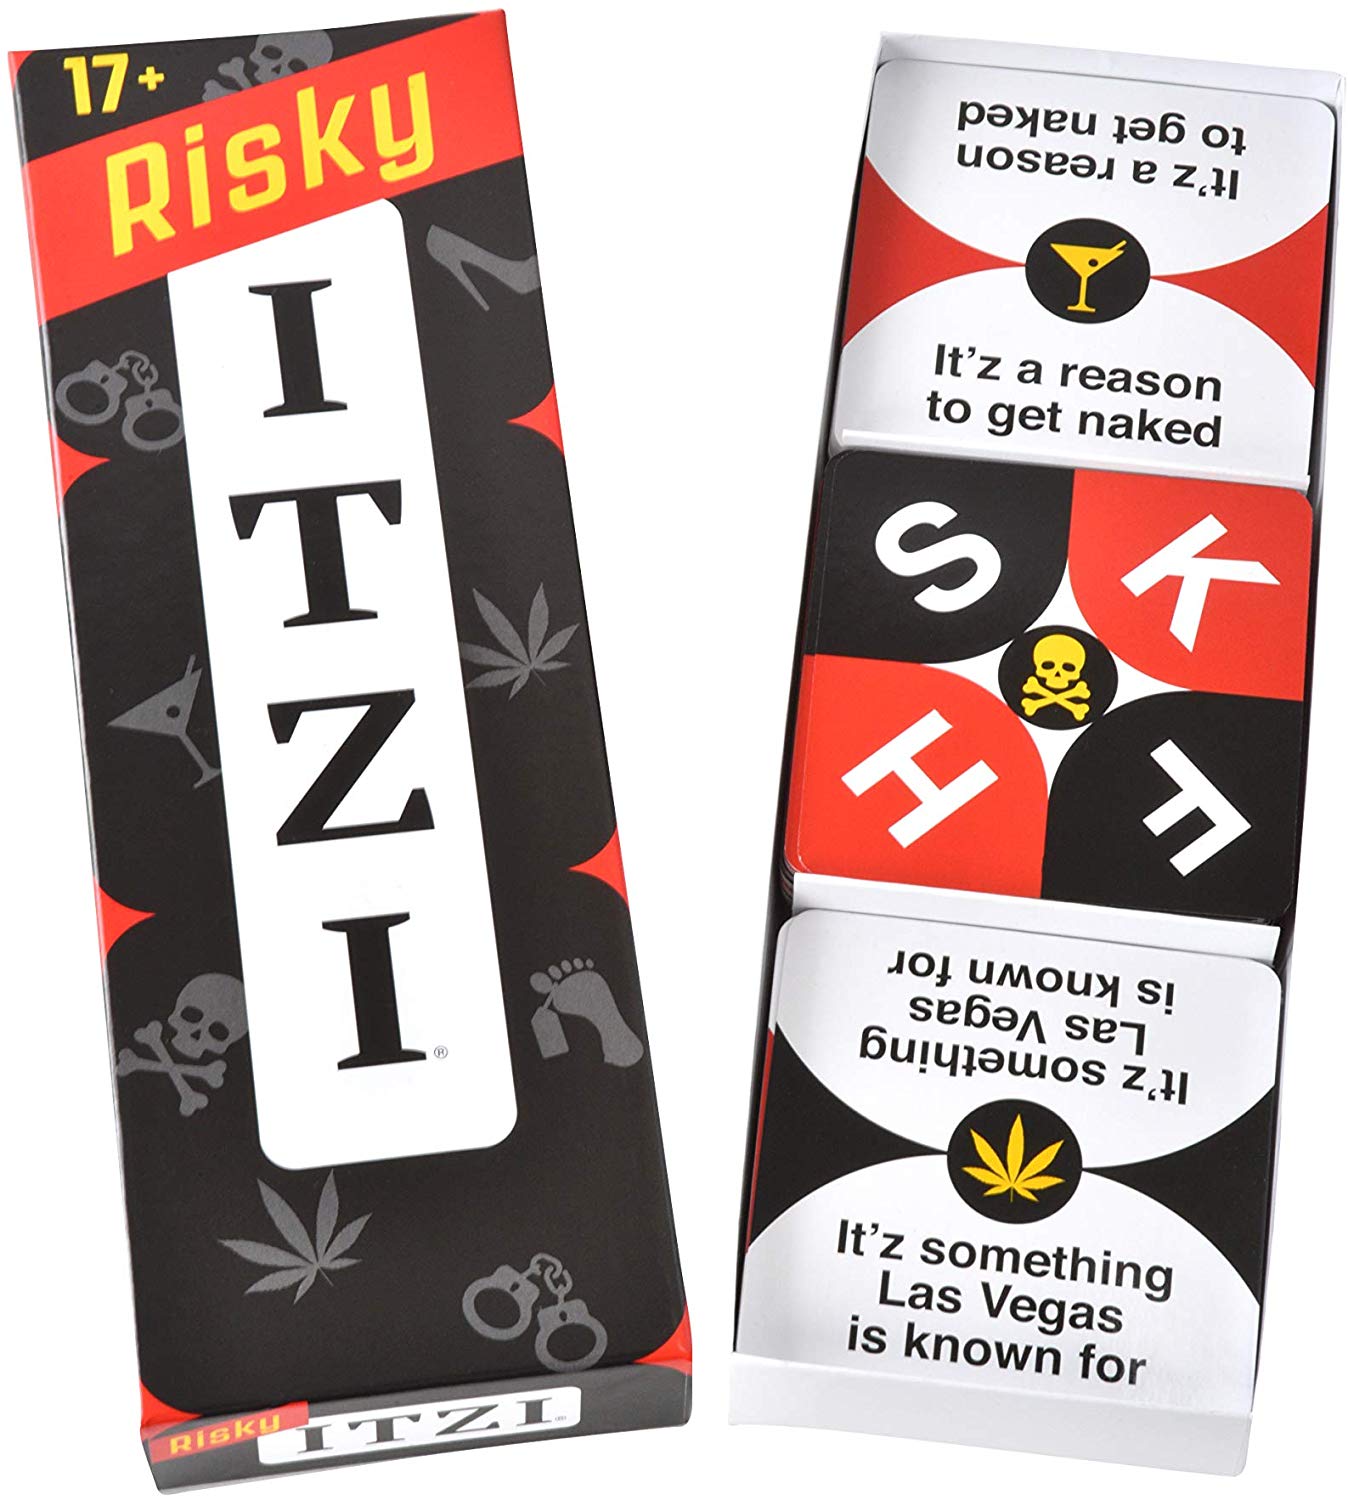 Risky ITZI - by Carma Games